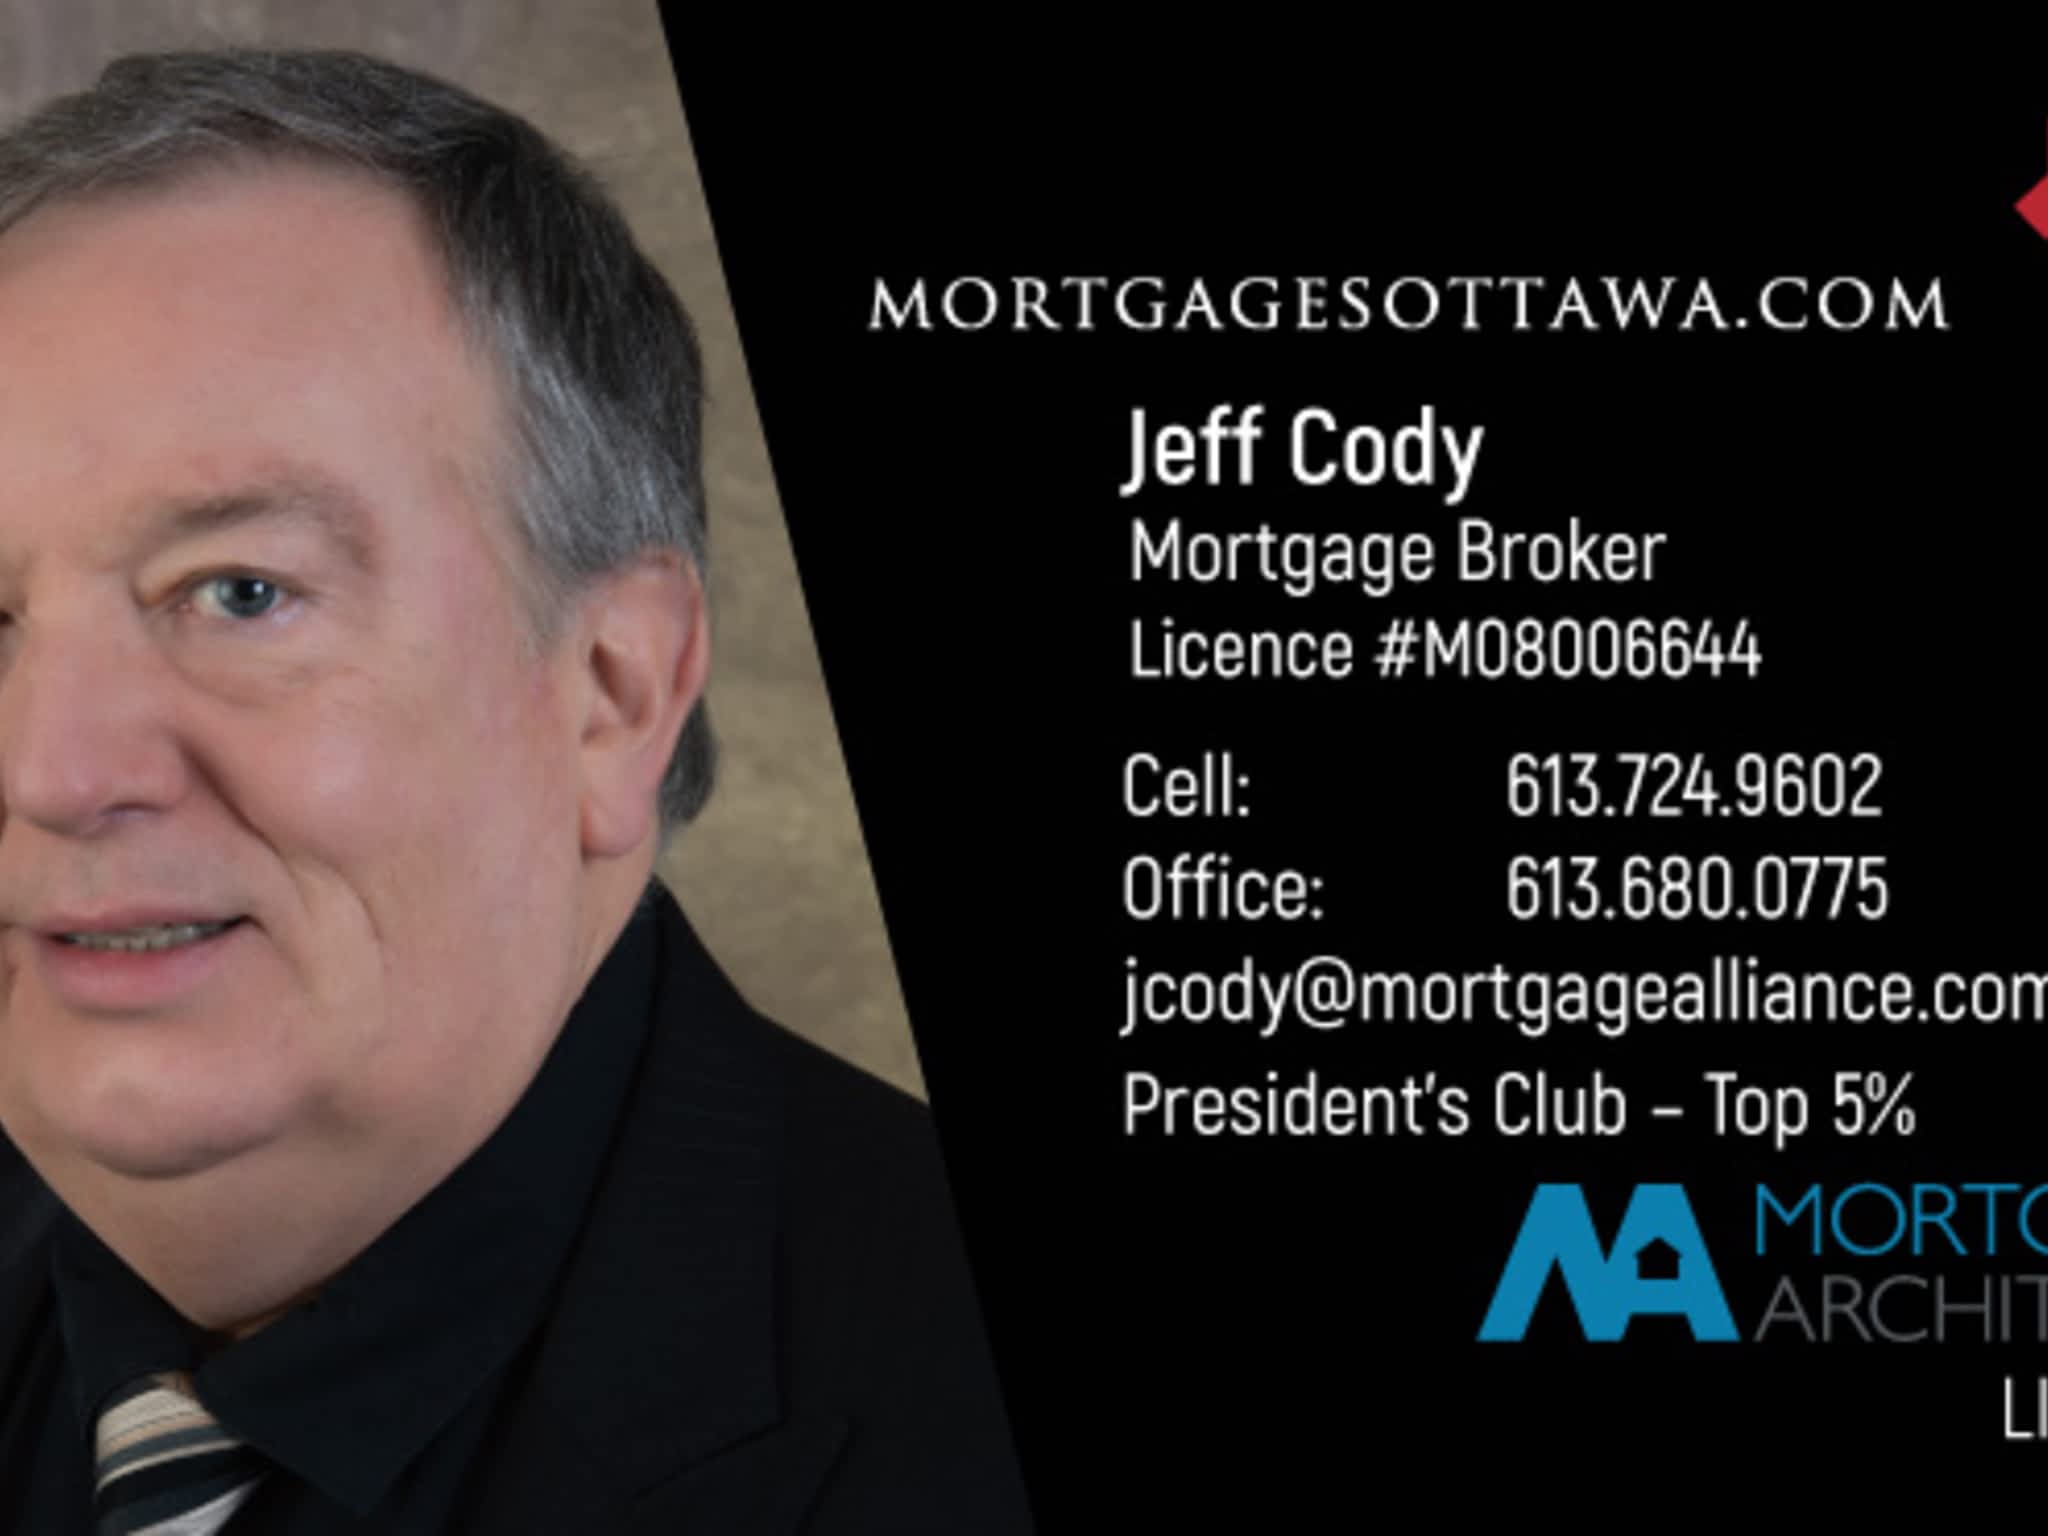 photo Jeff Cody - Mortgage Broker - Platinum Mortgages Ottawa